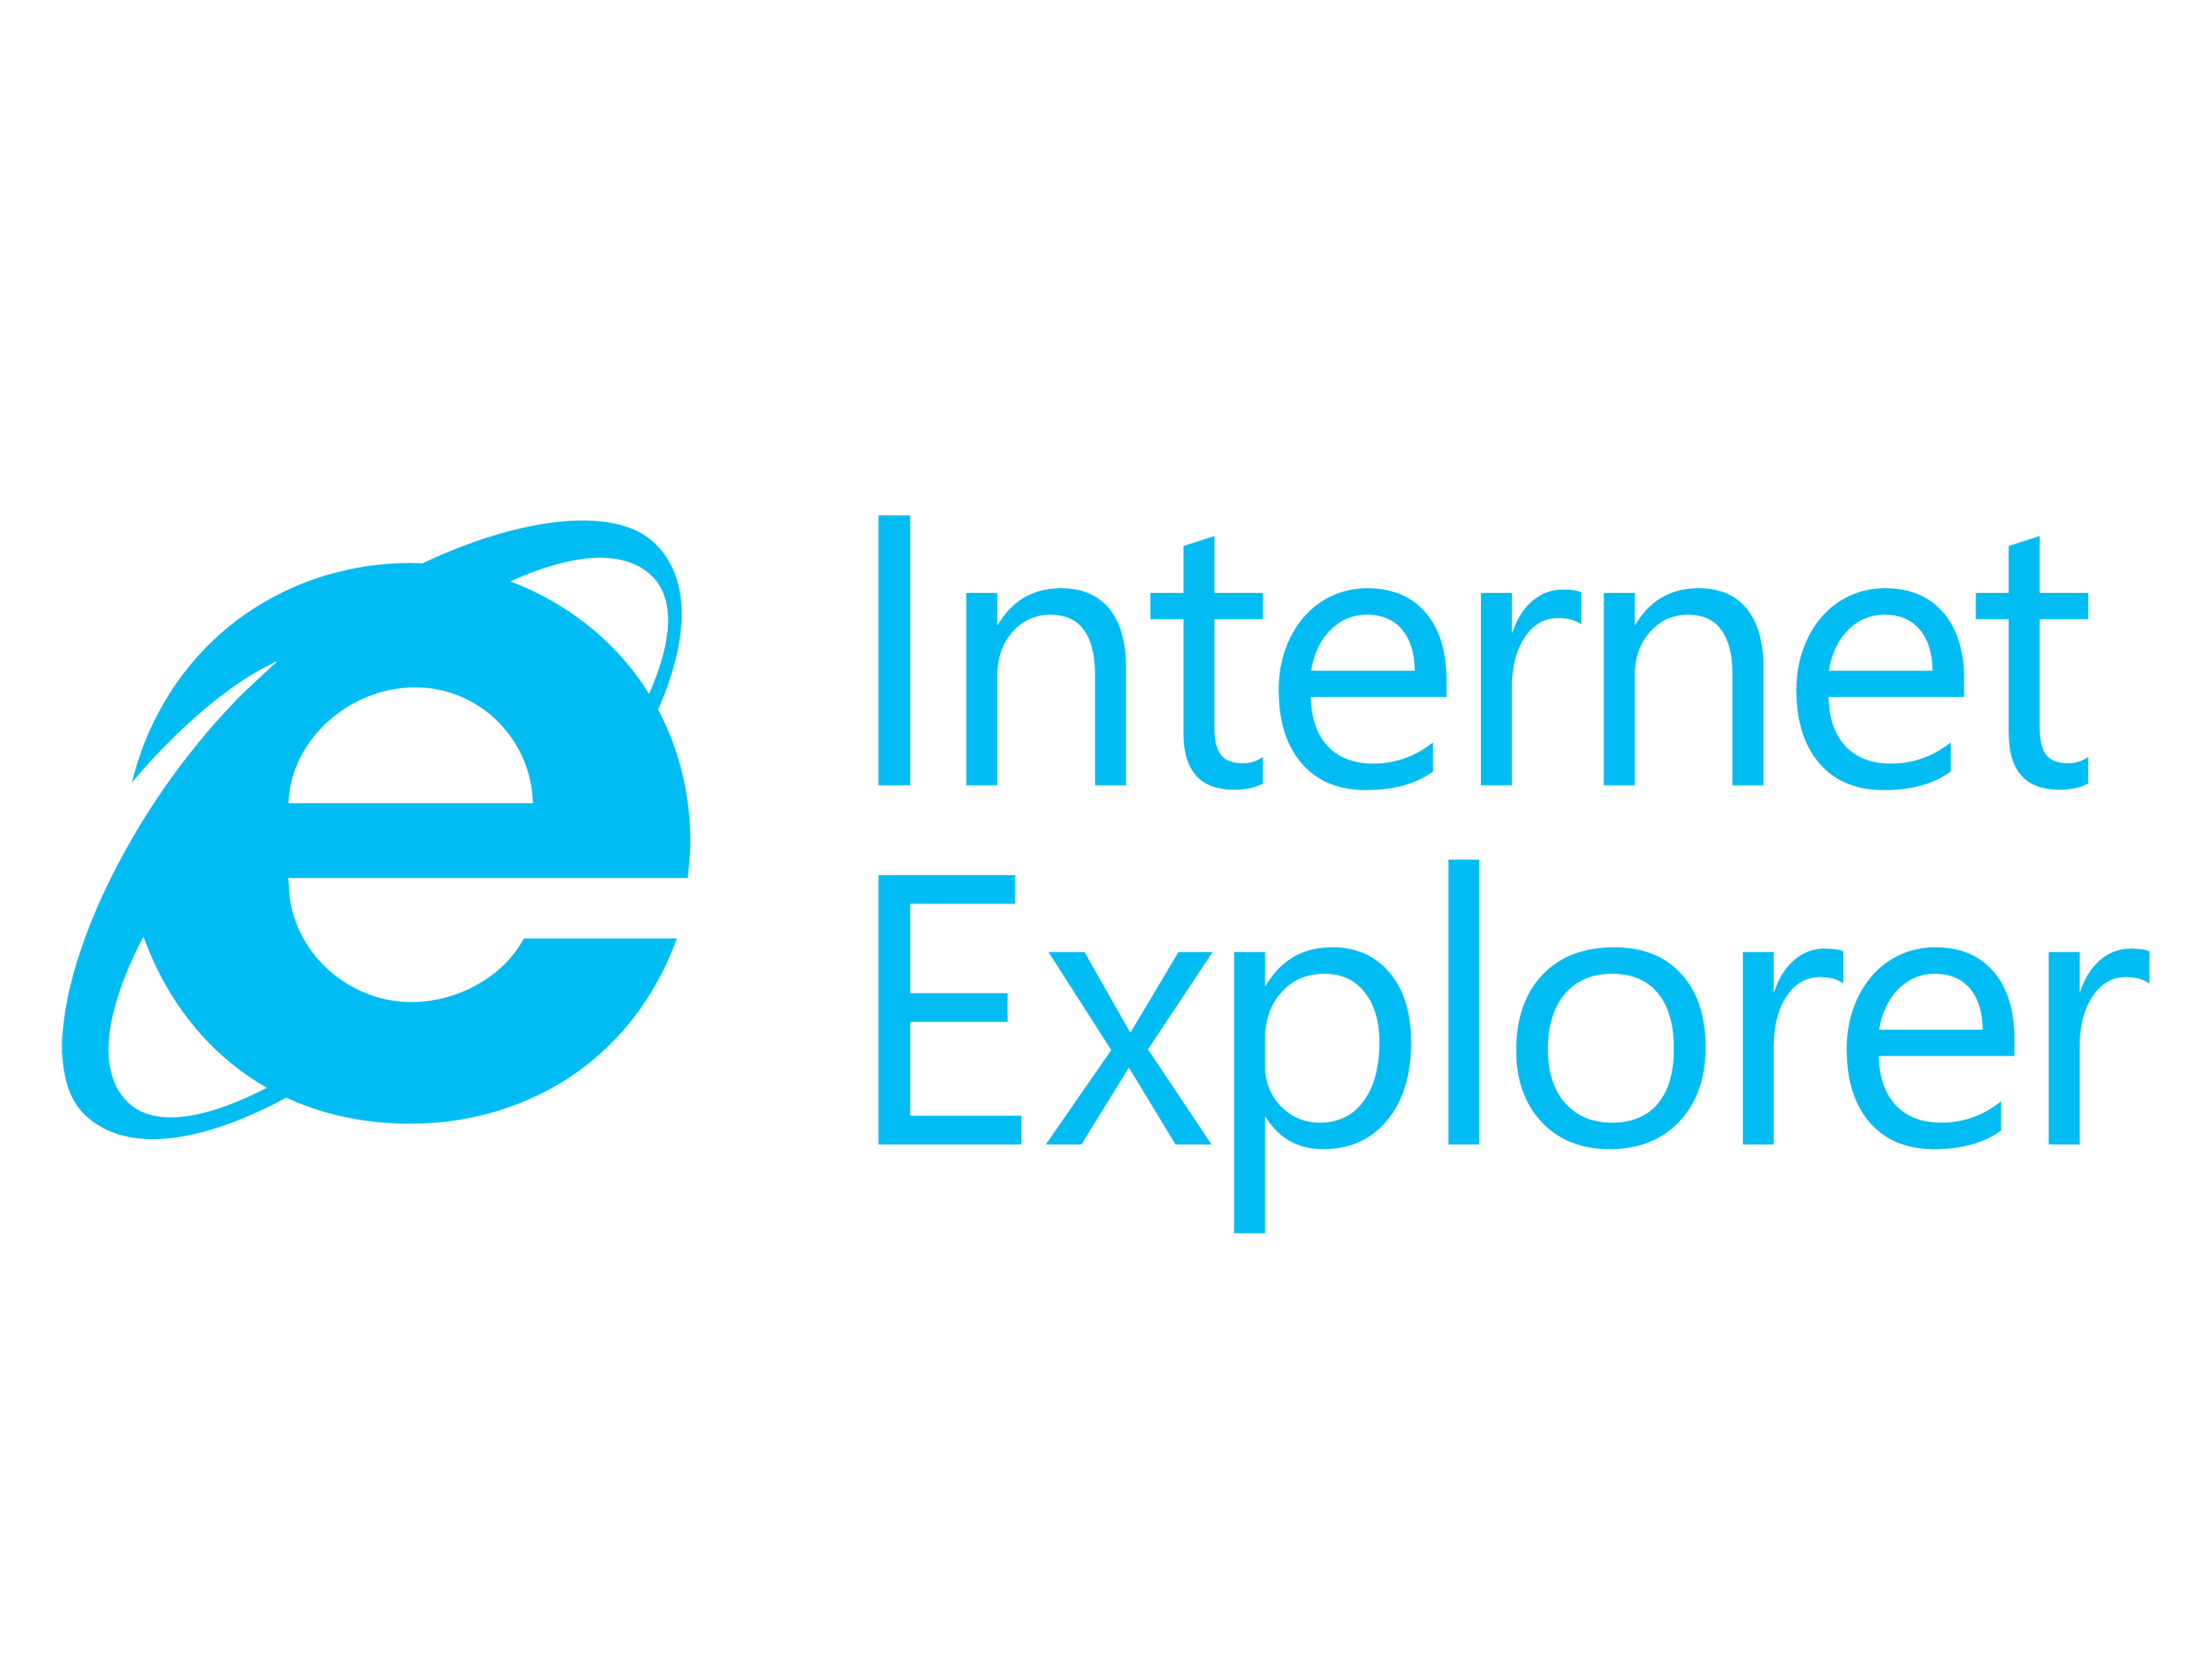 Internet-Explorer-logo